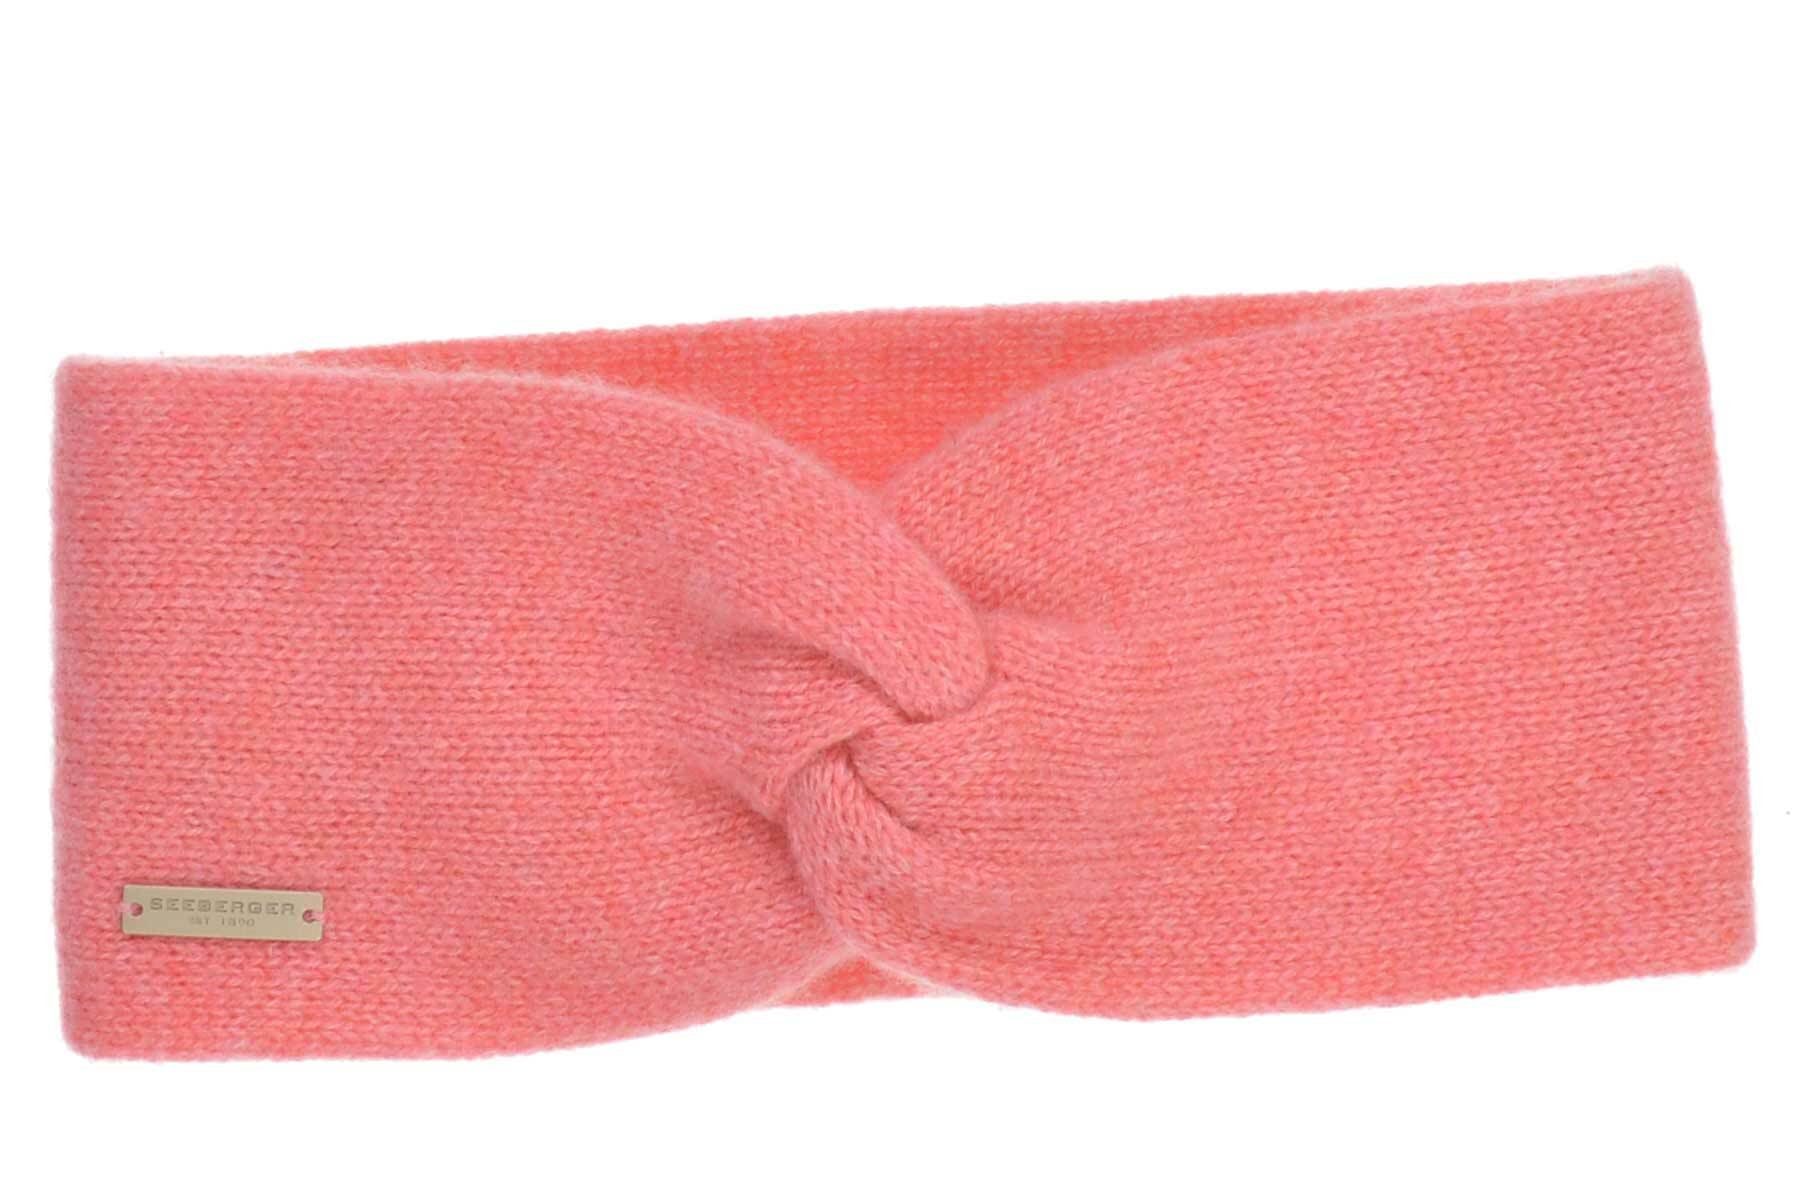 Seeberger Stirnband Cashmere hummer mit Knotendetail 17325-0 Stirnband